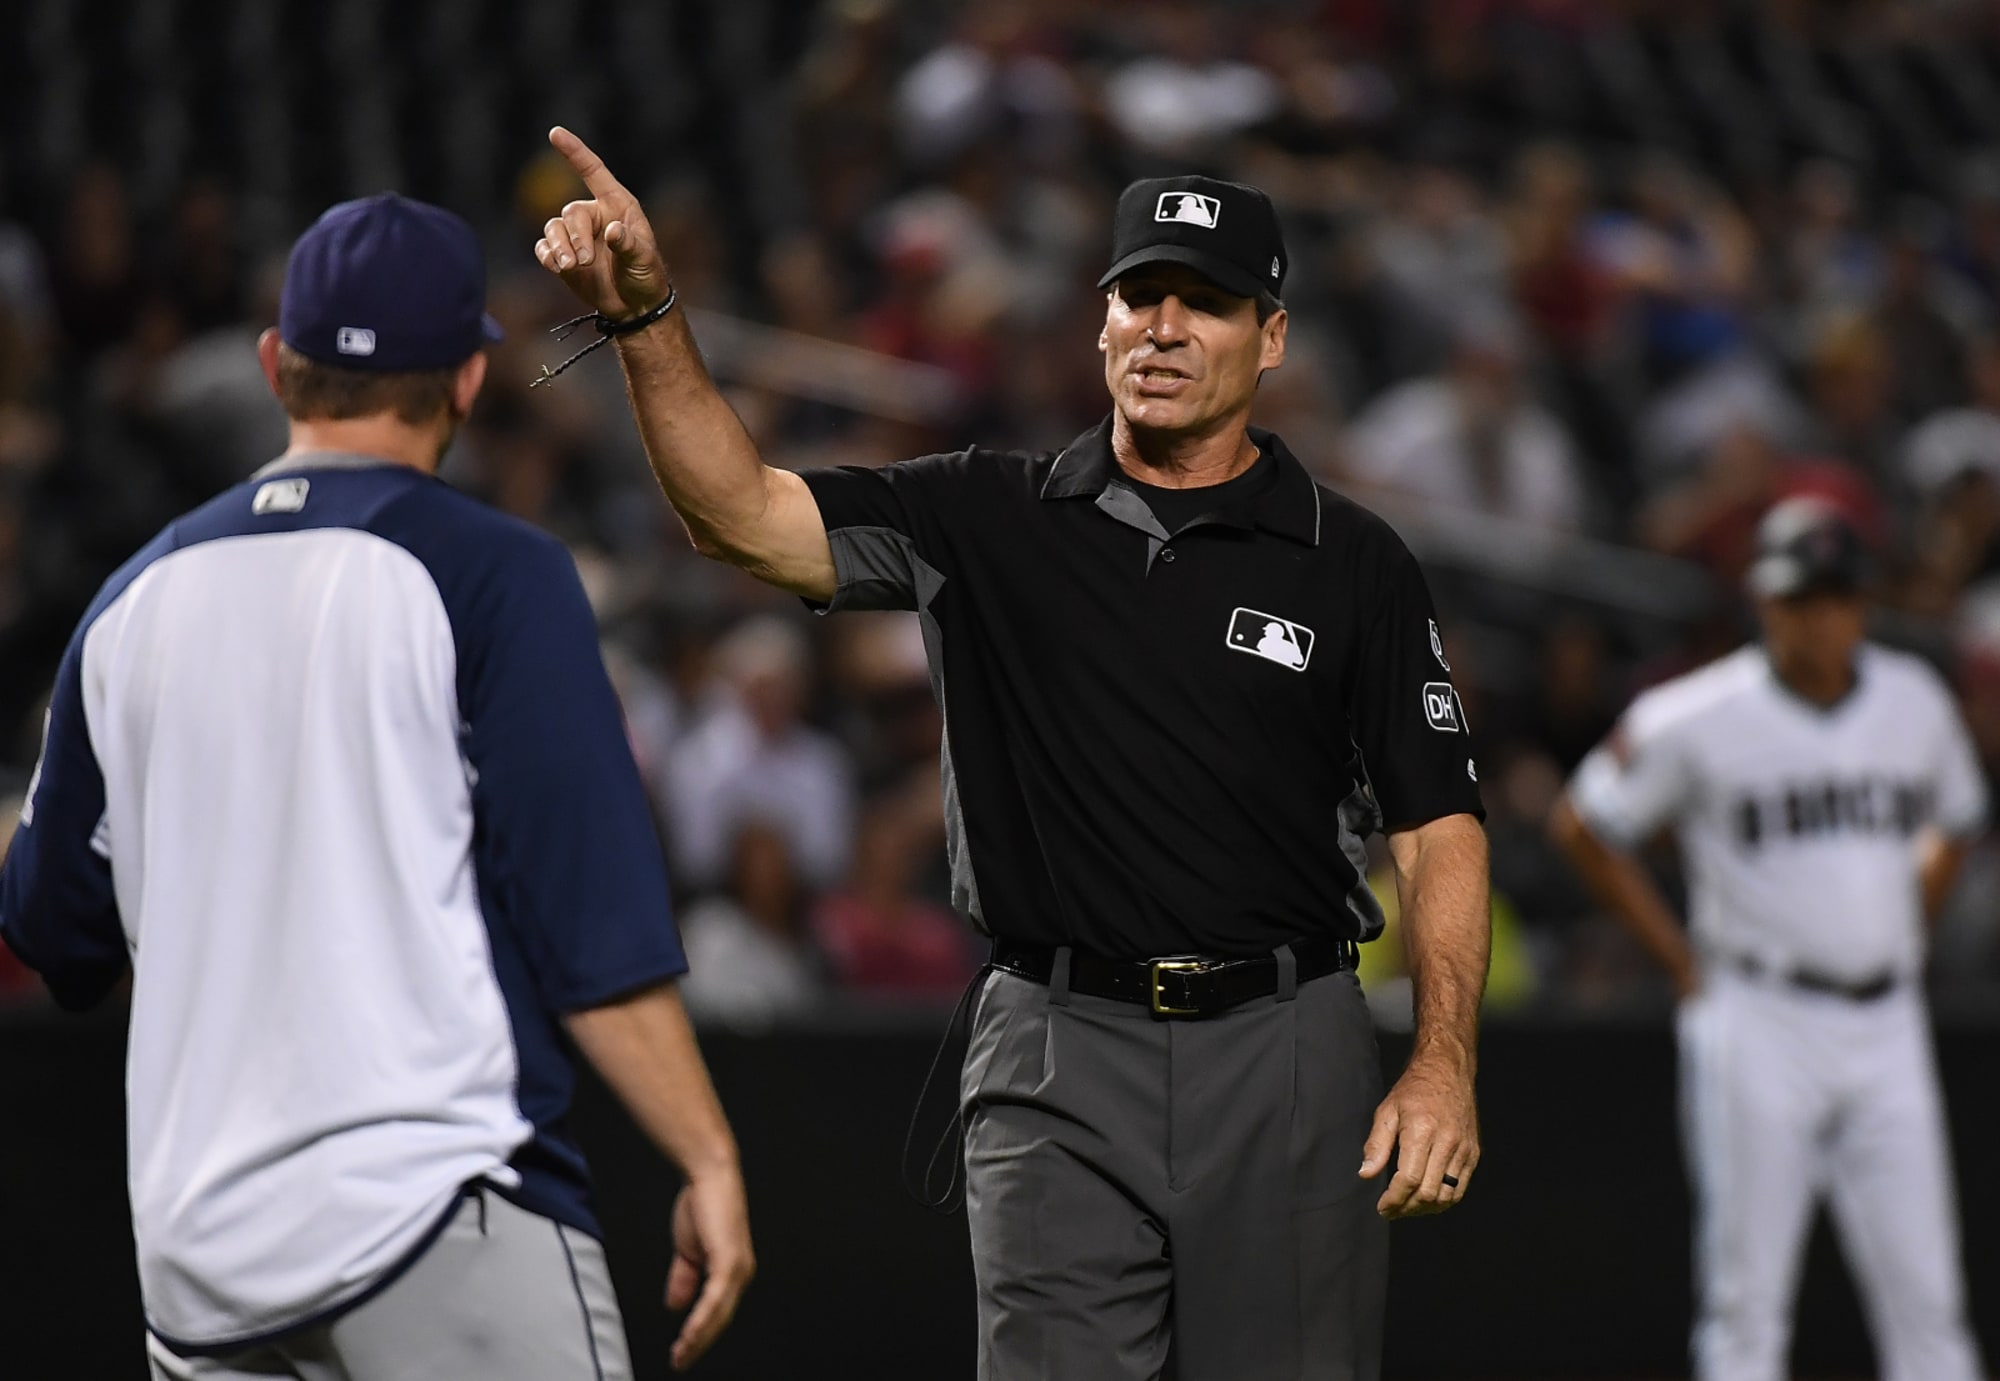 MLB Umpire Angel Hernandez takes spring training game too far